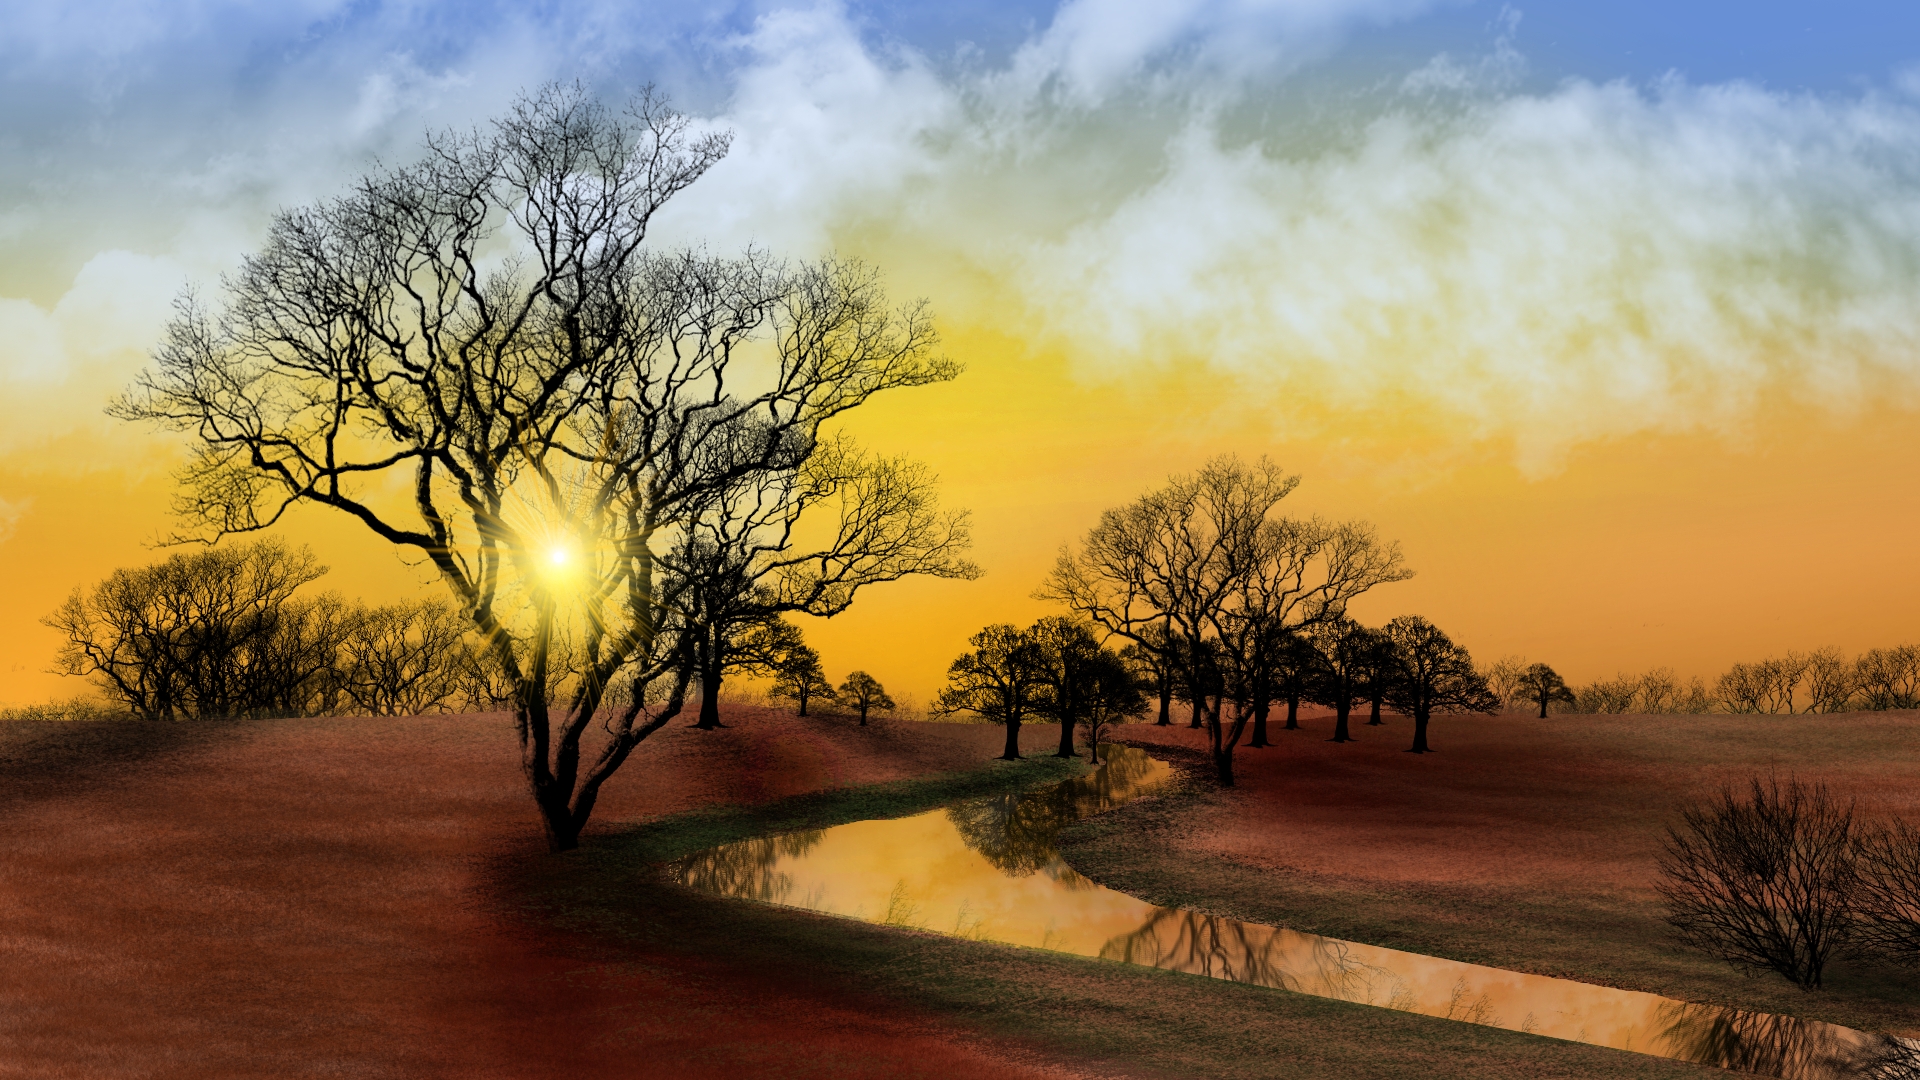 General 1920x1080 digital painting nature landscape sunlight natural light reflection water sky trees digital art